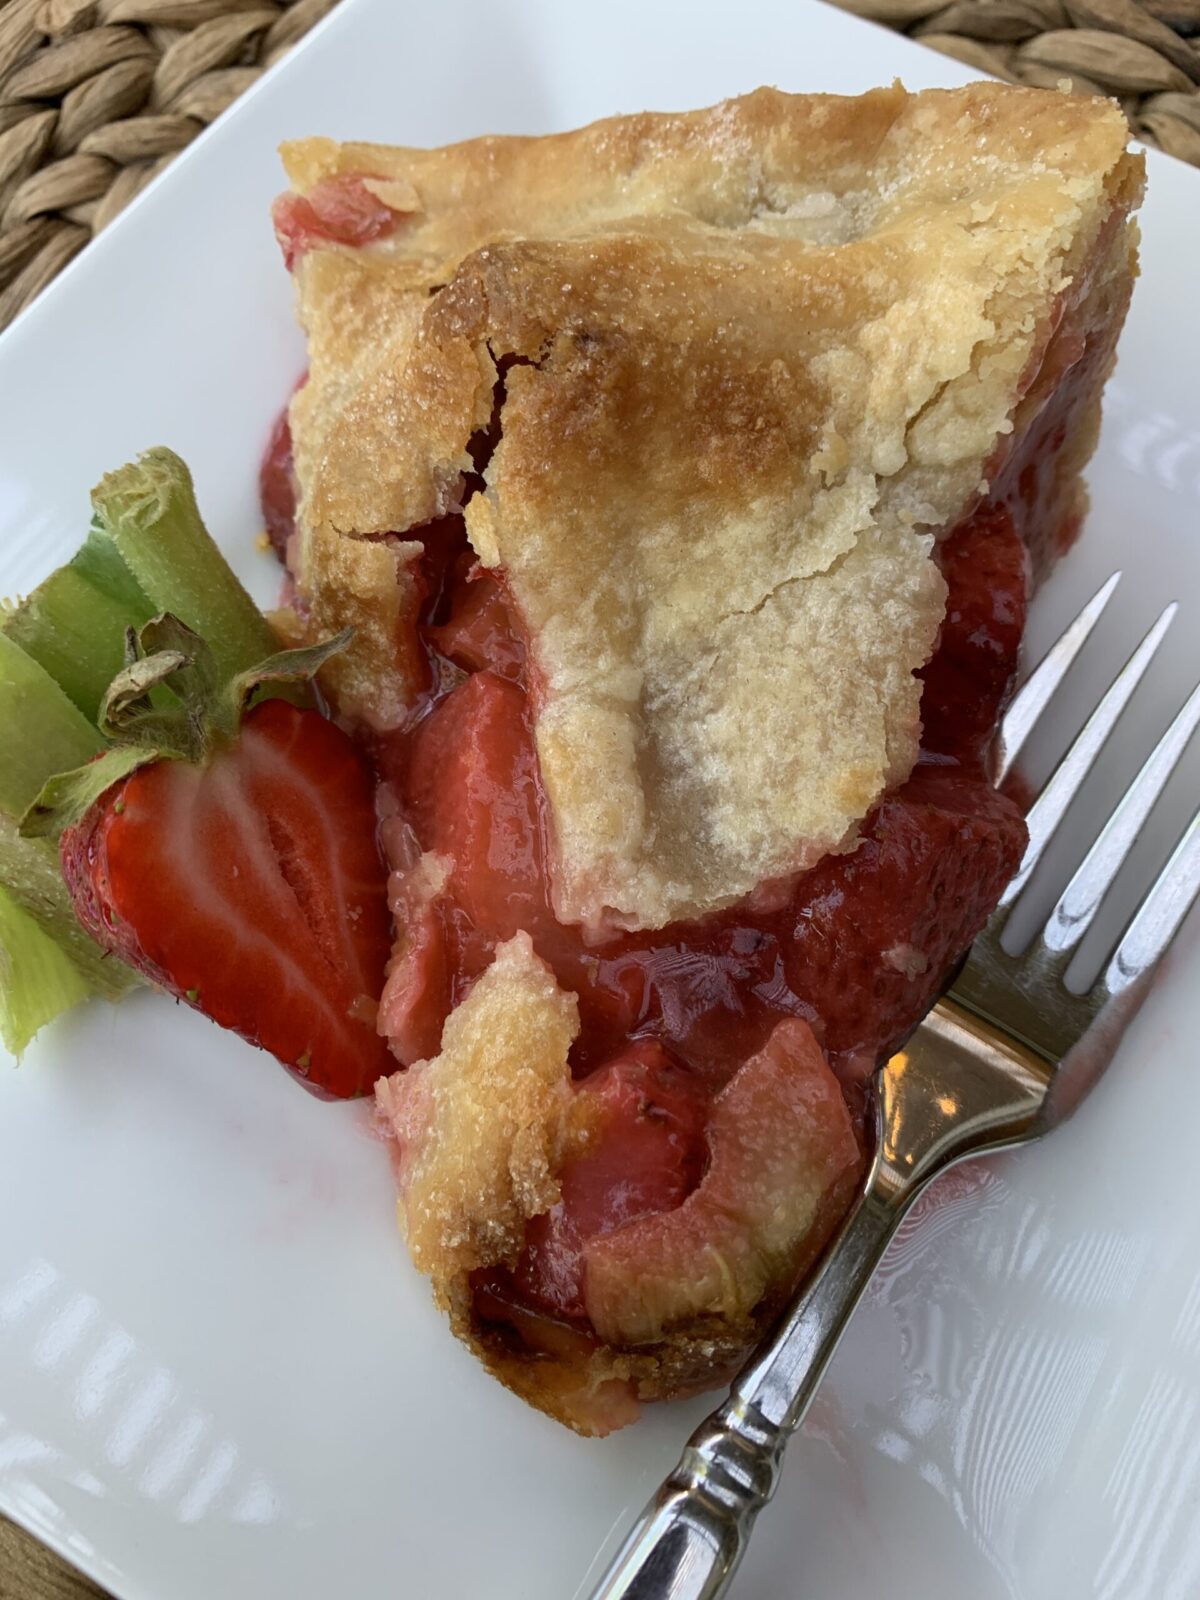 Strawberry rhubarb pie on a plate.